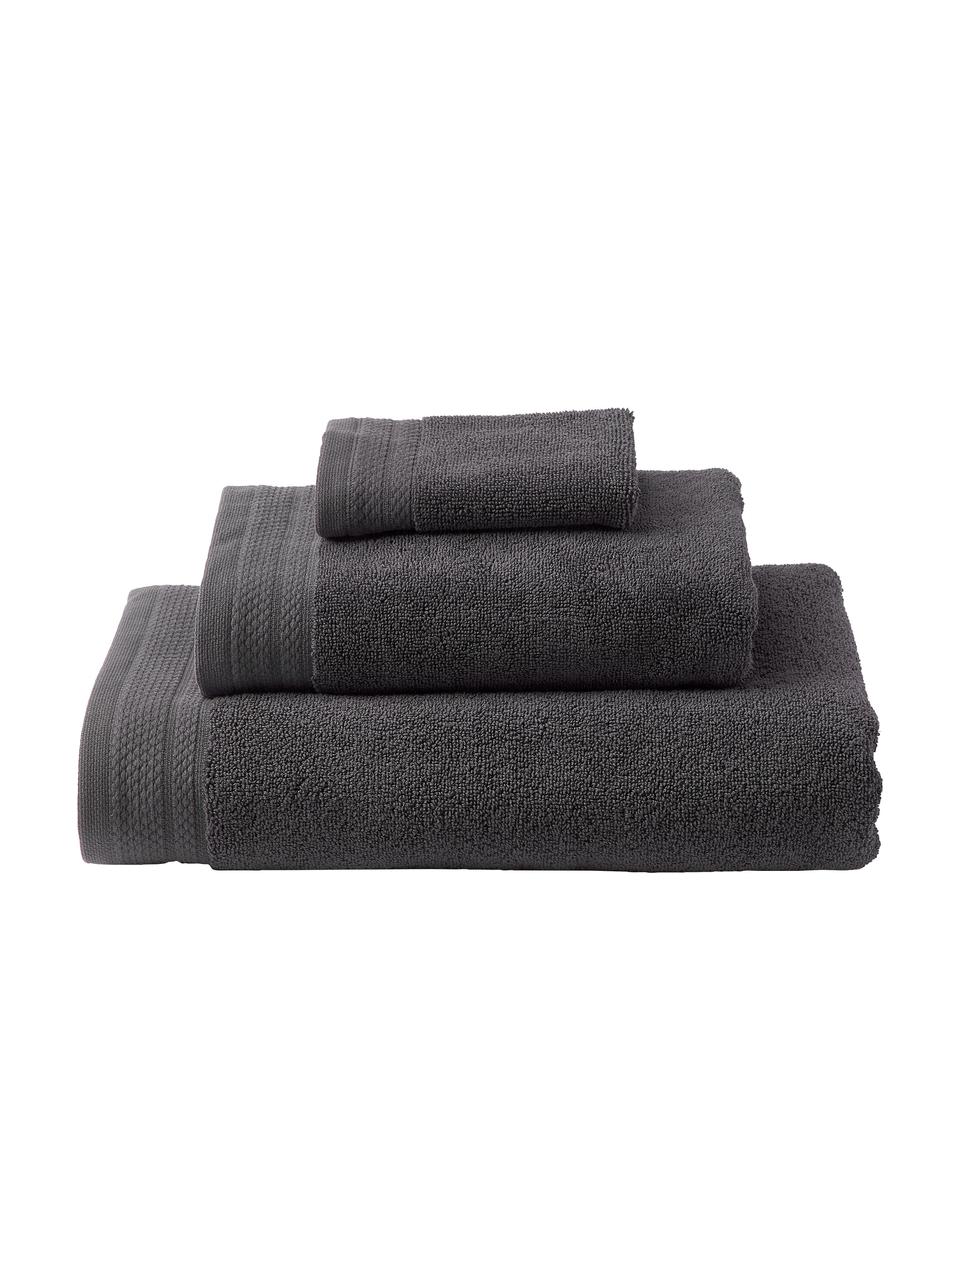 Set de toallas de algodón ecológico Premium, 3 uds., 100% algodón ecológico con certificado GOTS (por GCL International, GCL-300517)
Gramaje superior 600 g/m², Gris antracita, Set de diferentes tamaños